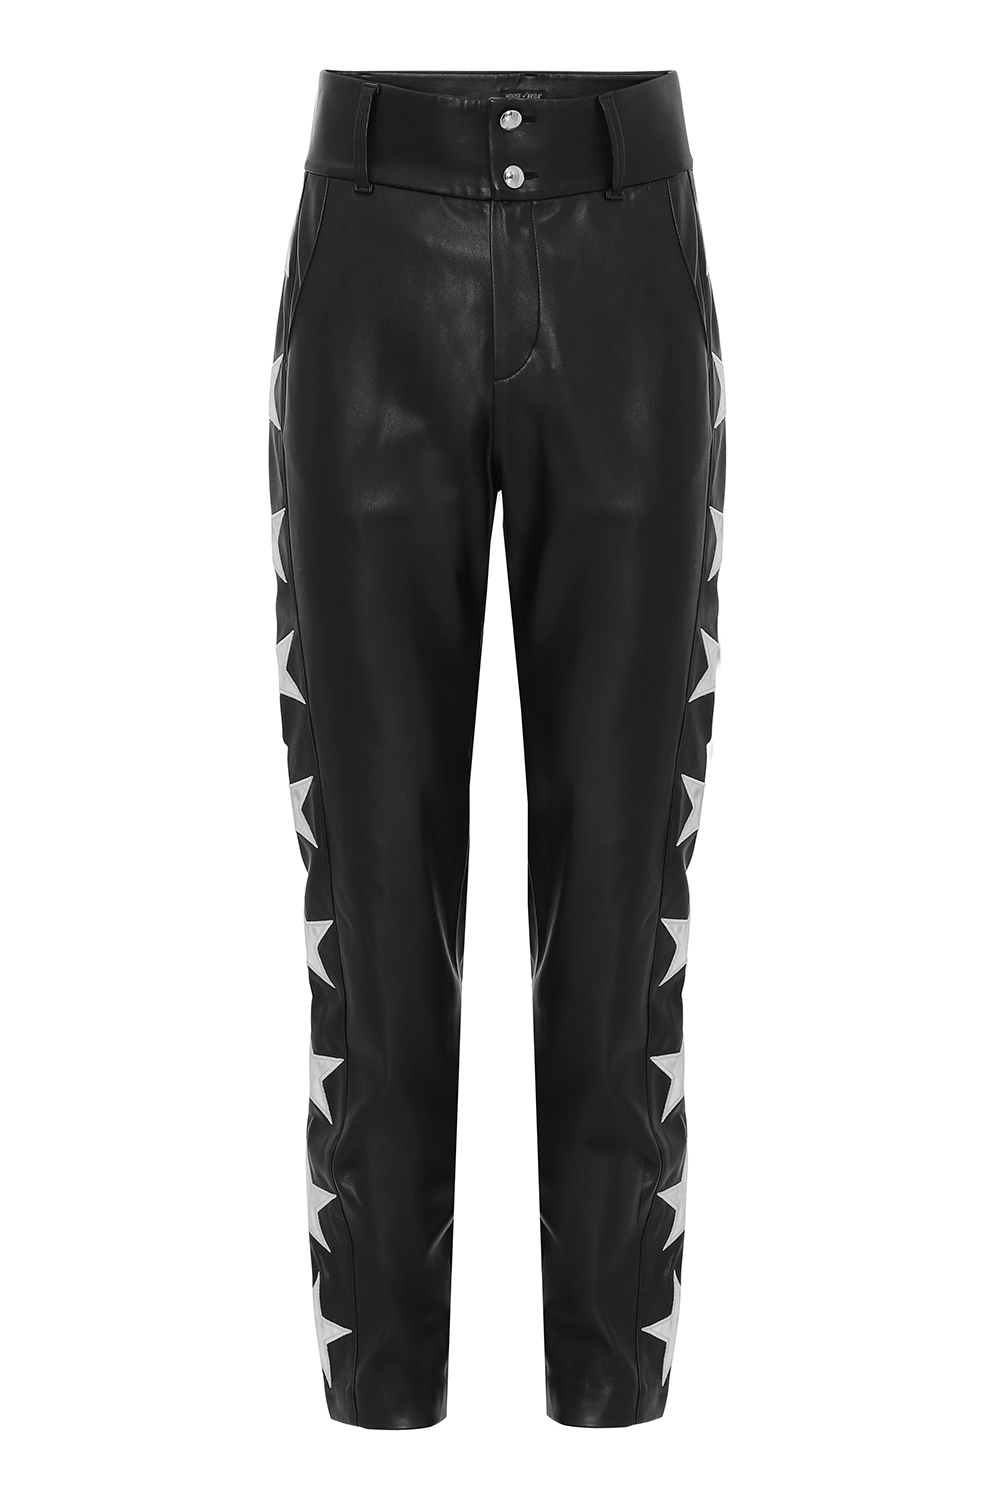 leather pants grey